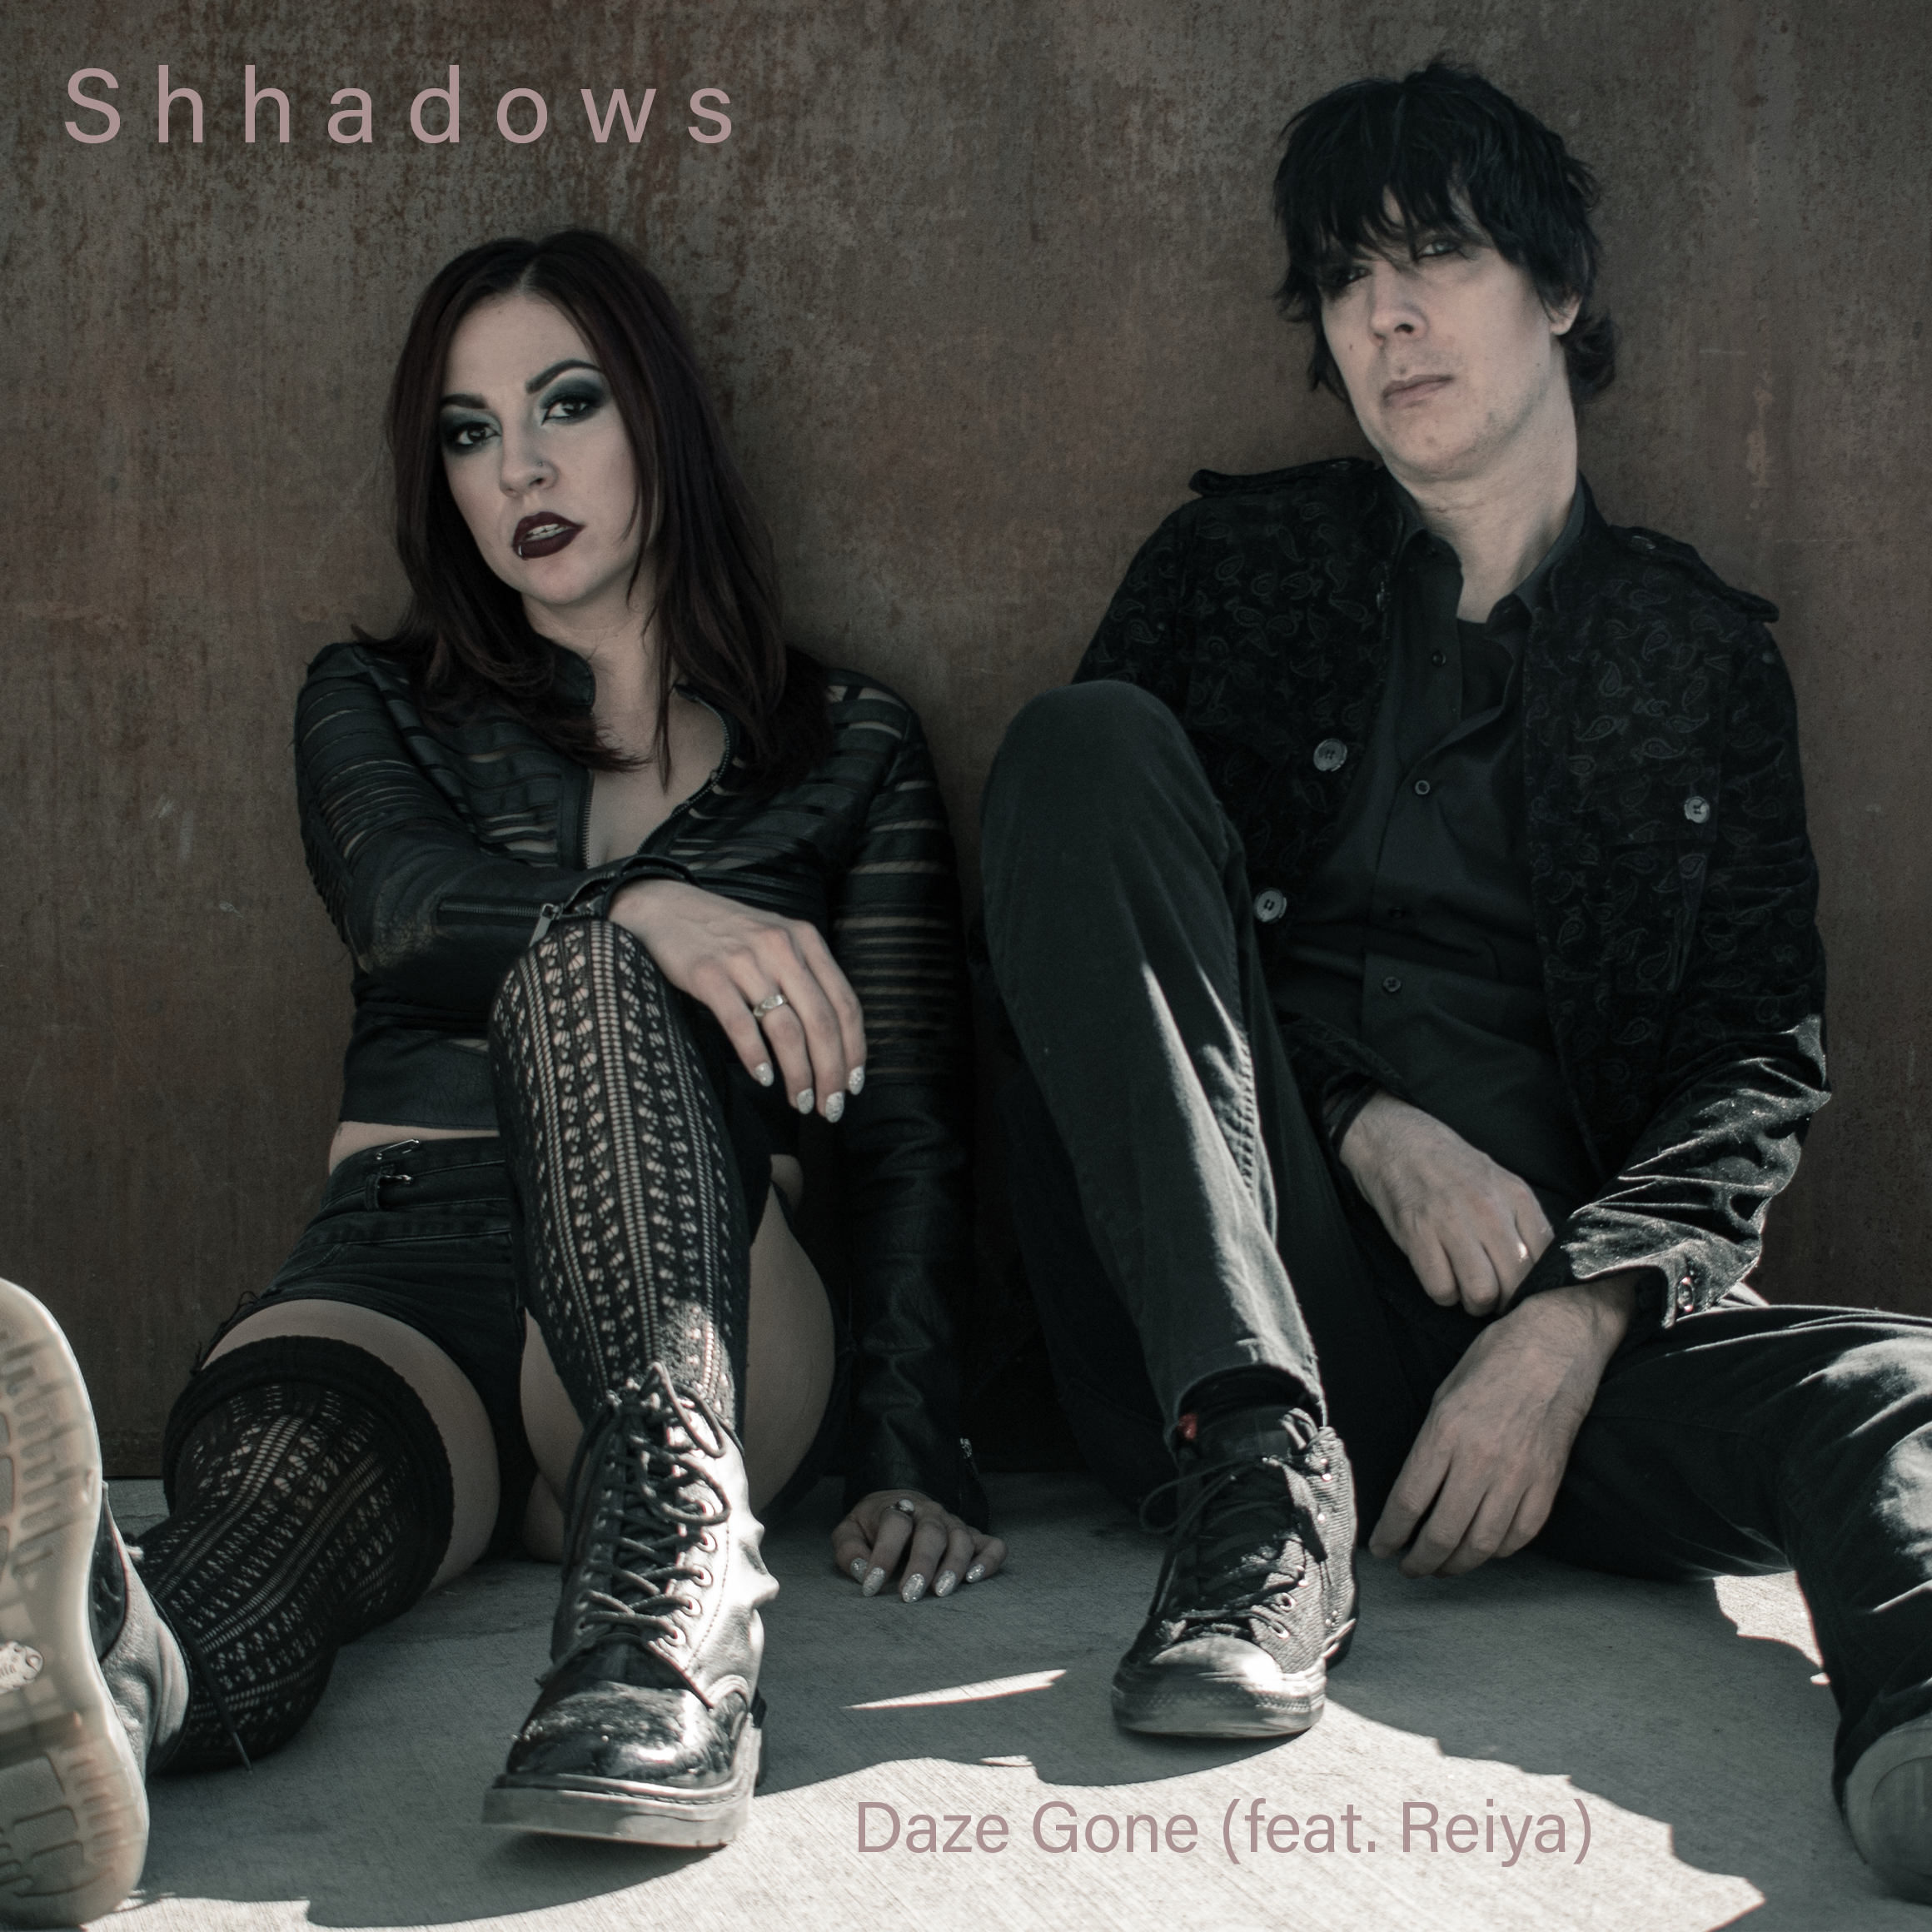 Are You Ready for the Next Shhadows no. 1 Smash Hit? Daze Gone (feat. Reiya)